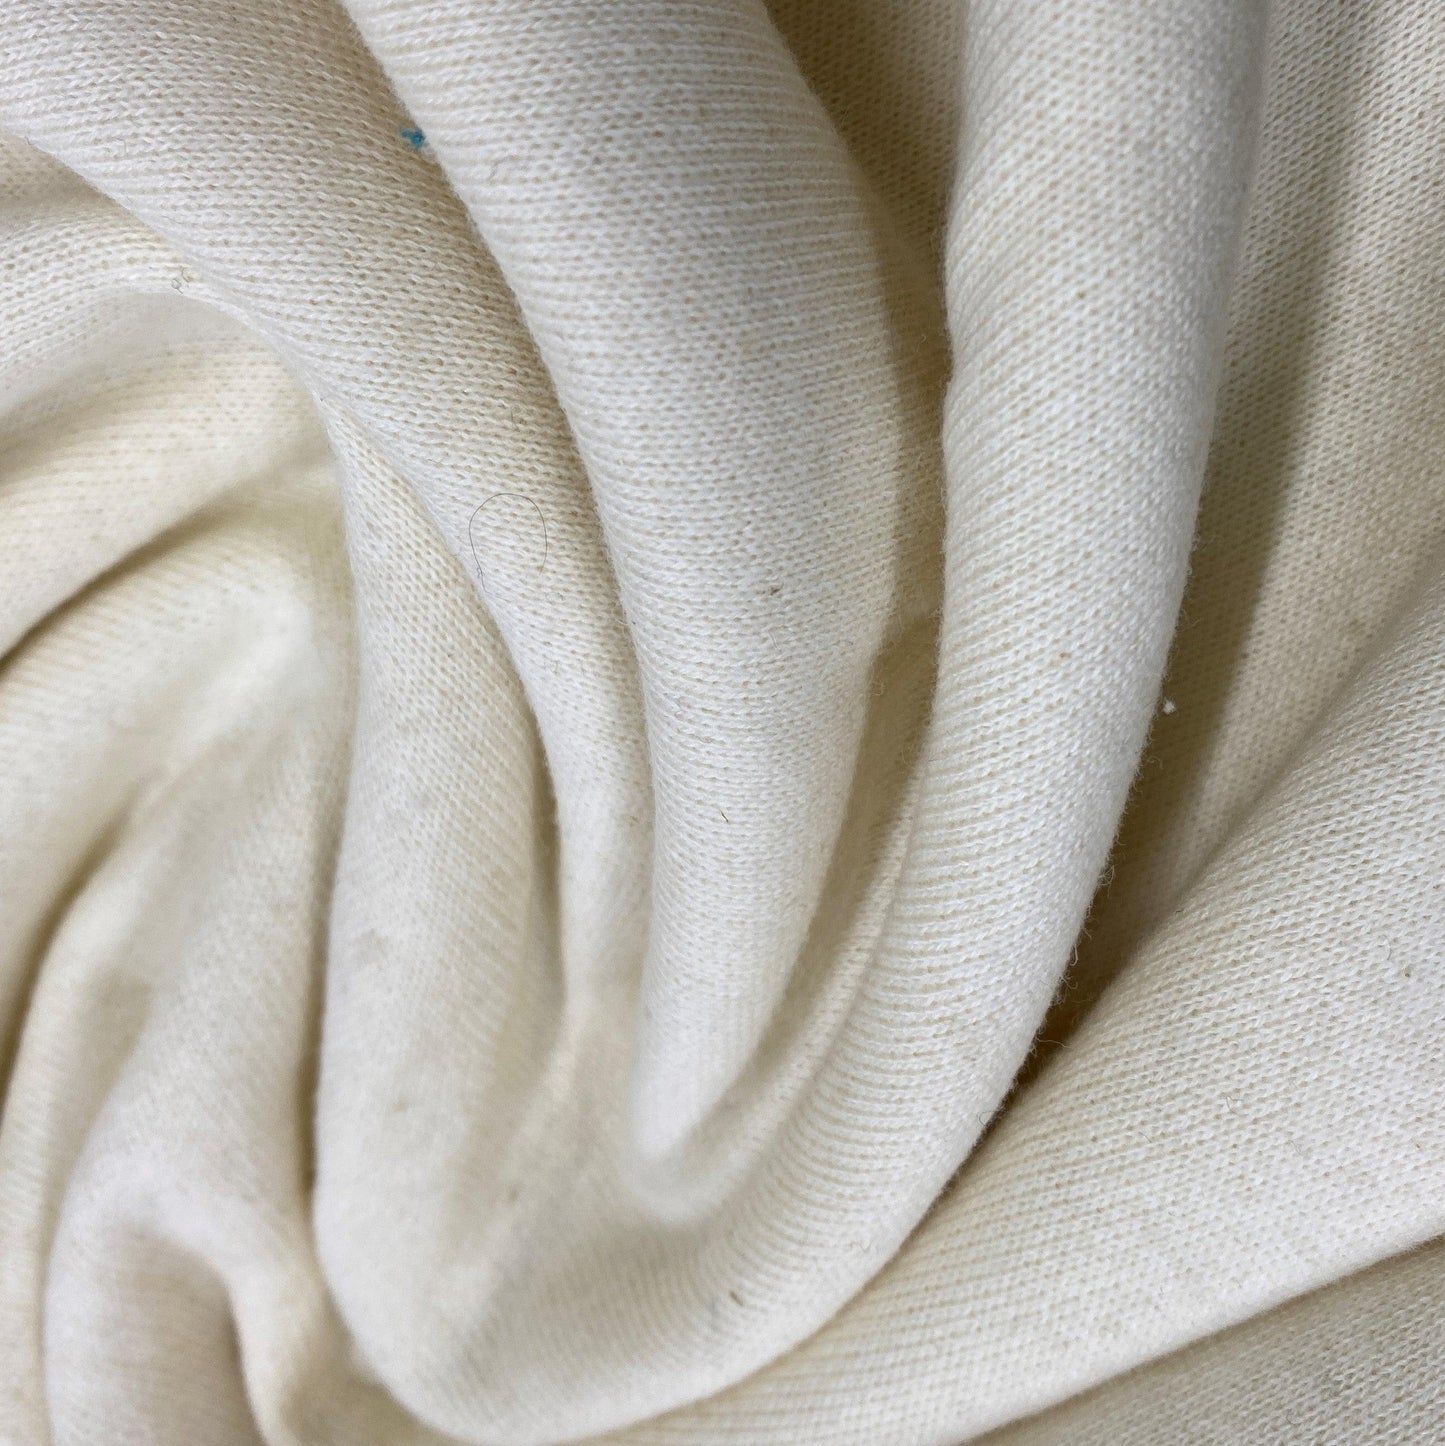 Hemp Cotton Fleece Fabric - 280 GSM, $11.95/yd, 15 Yards - Nature's Fabrics